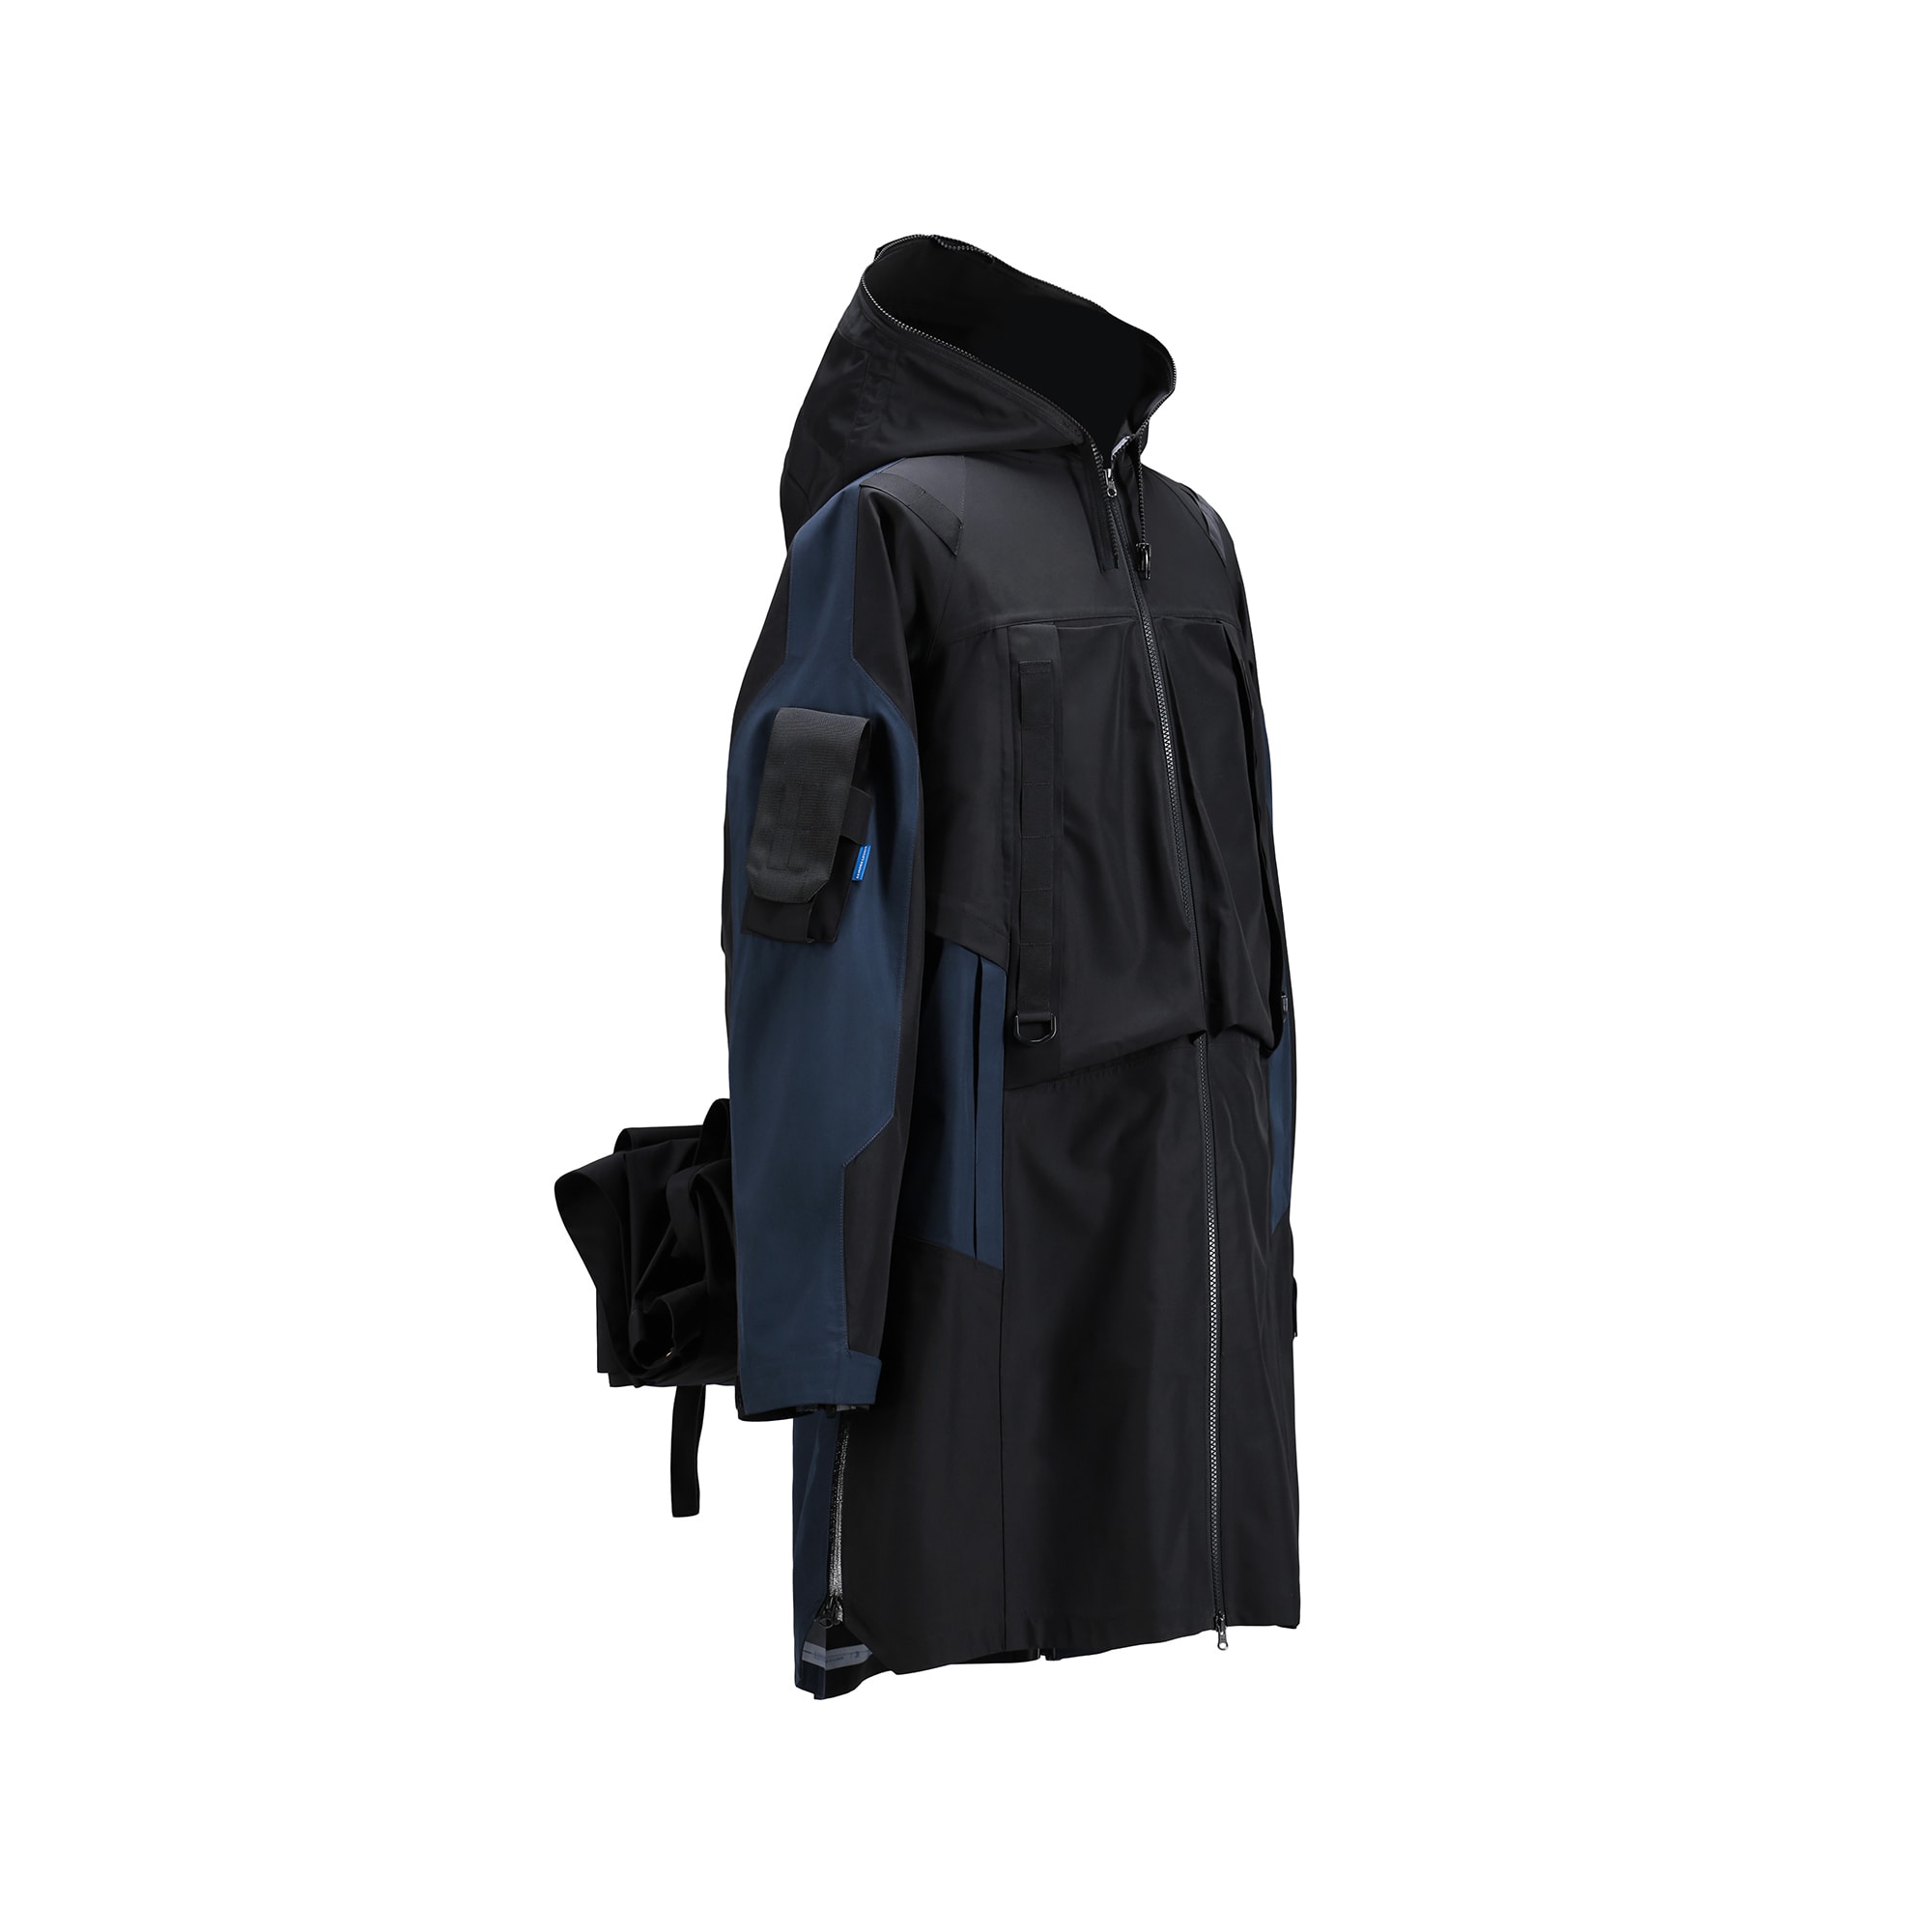 REINDEE LUSION 推出 2 合 1 帐篷背包式户外概念冲锋衣